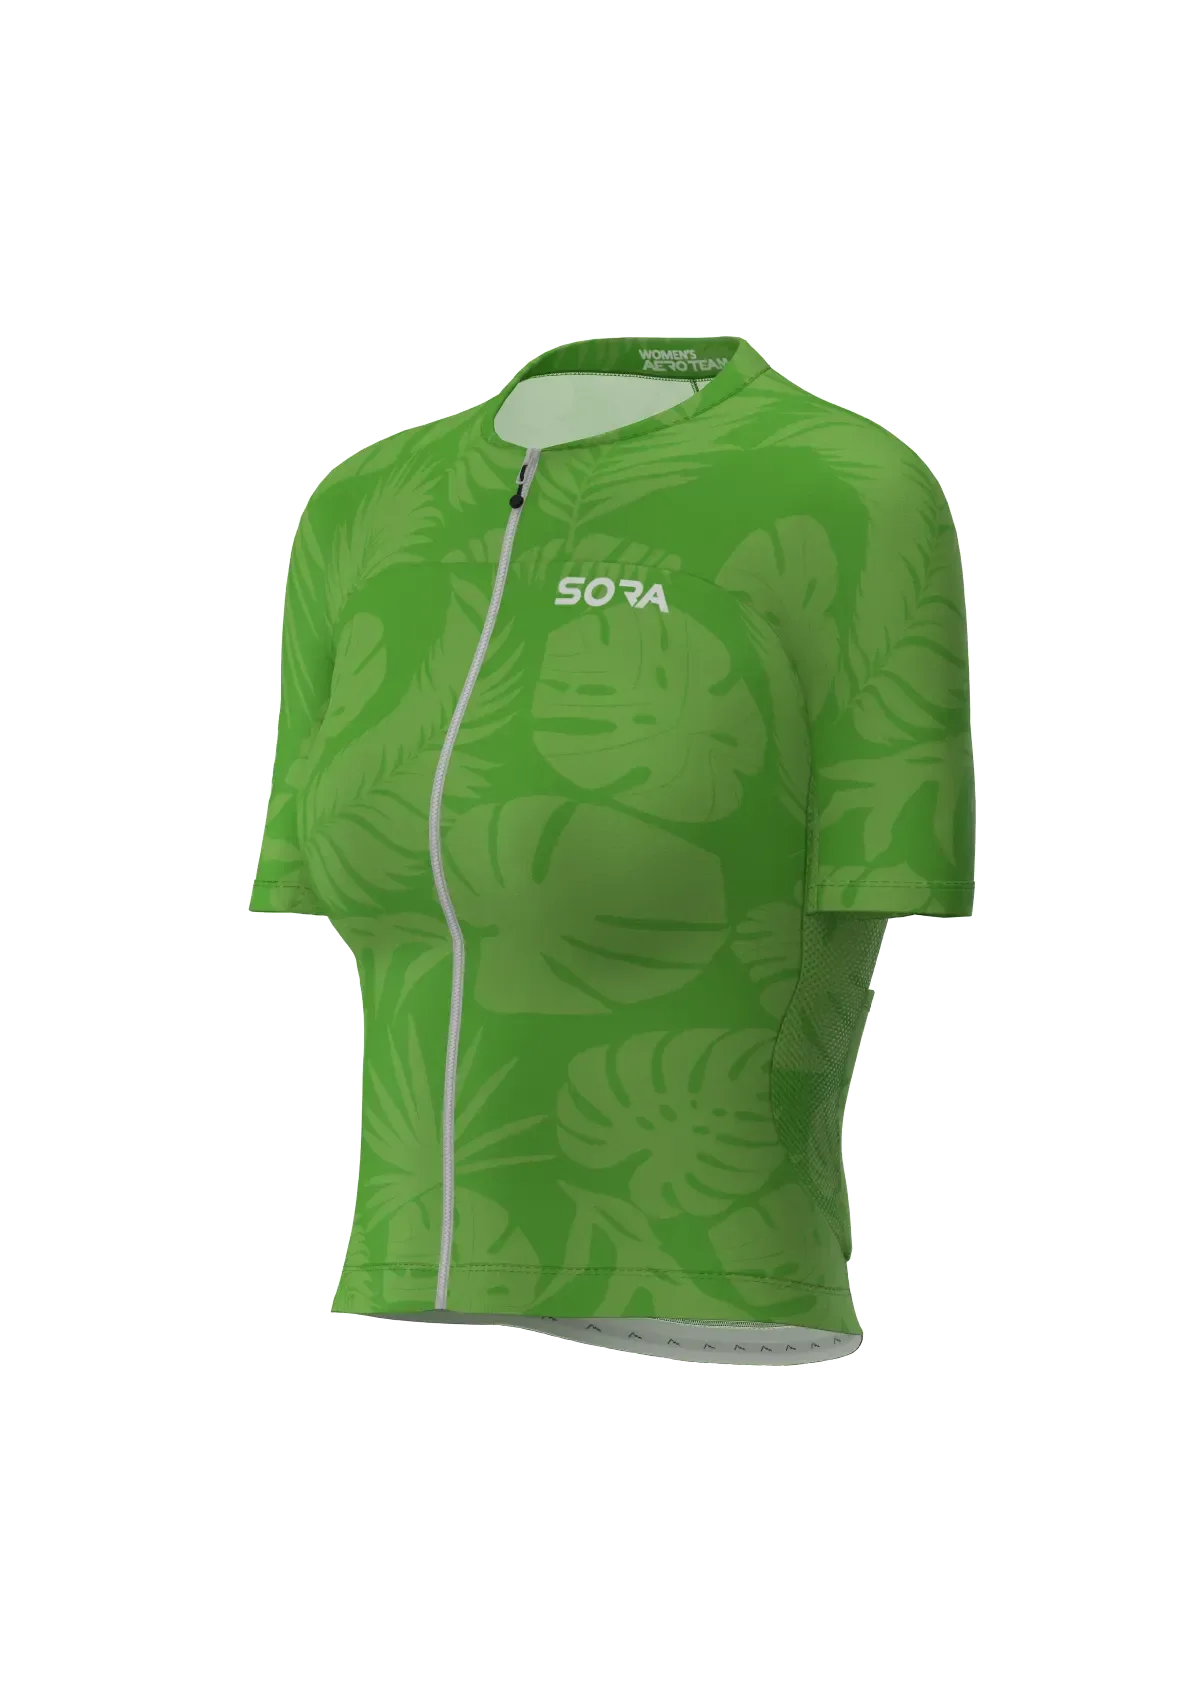 Aero Team women's cycling jersey green